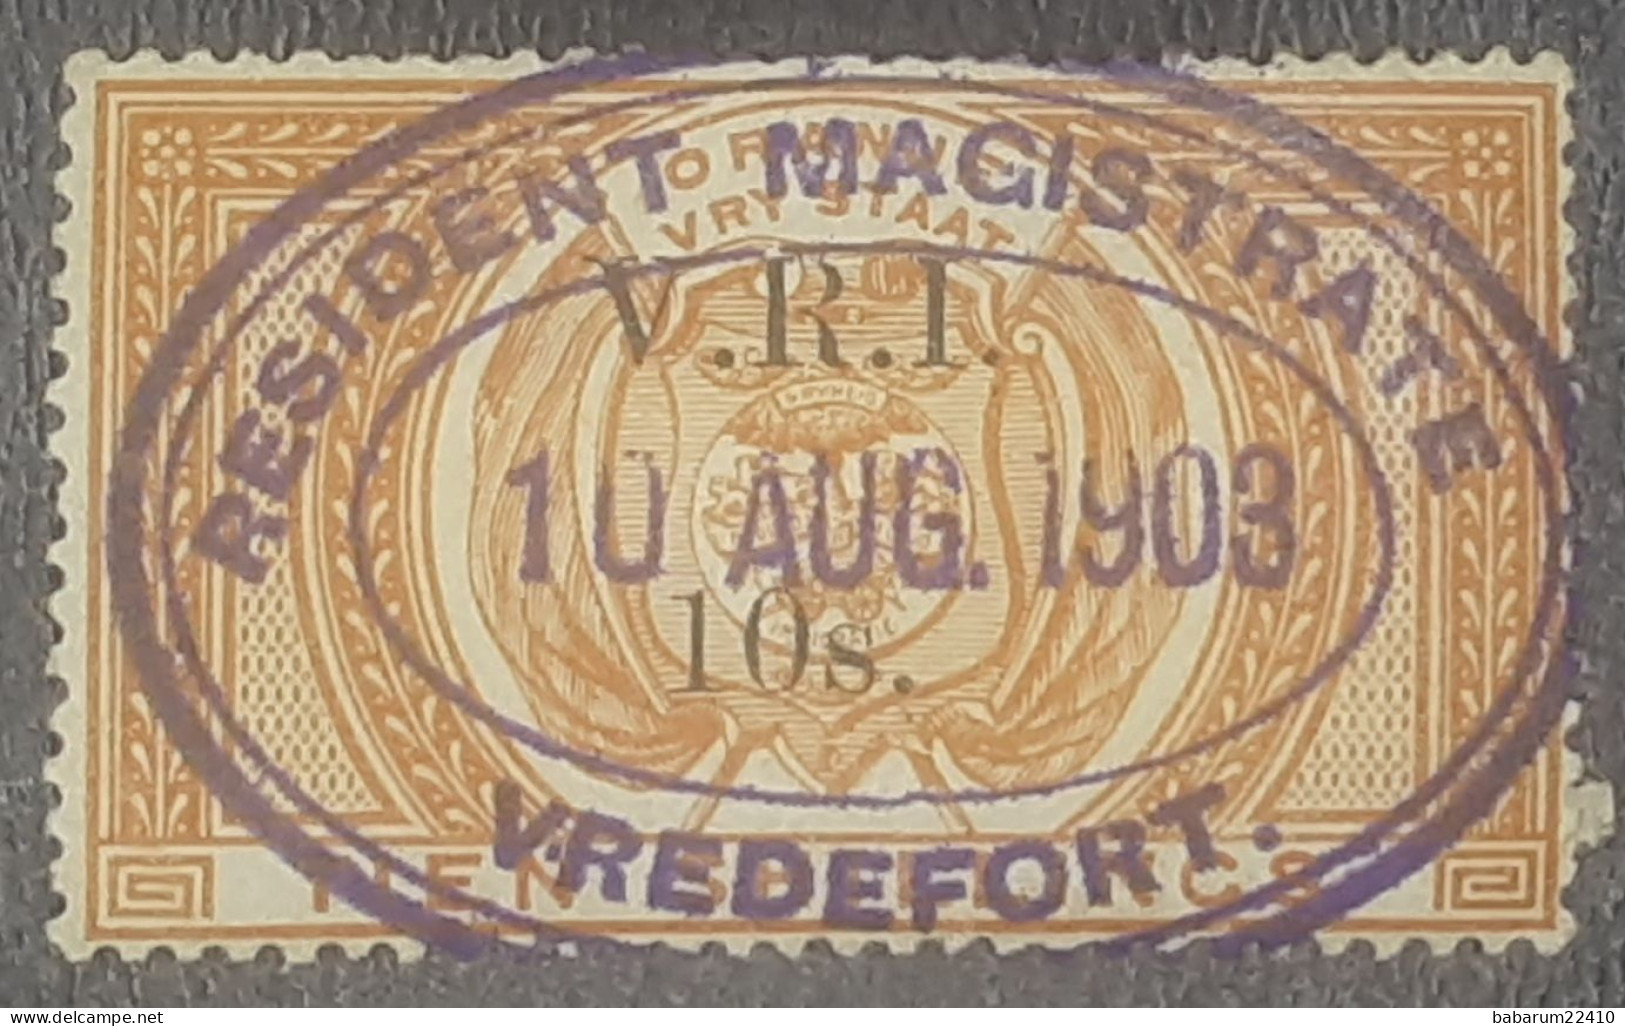 État Libre D Orange 1900 Fiscal 10 Shillings - Orange Free State (1868-1909)